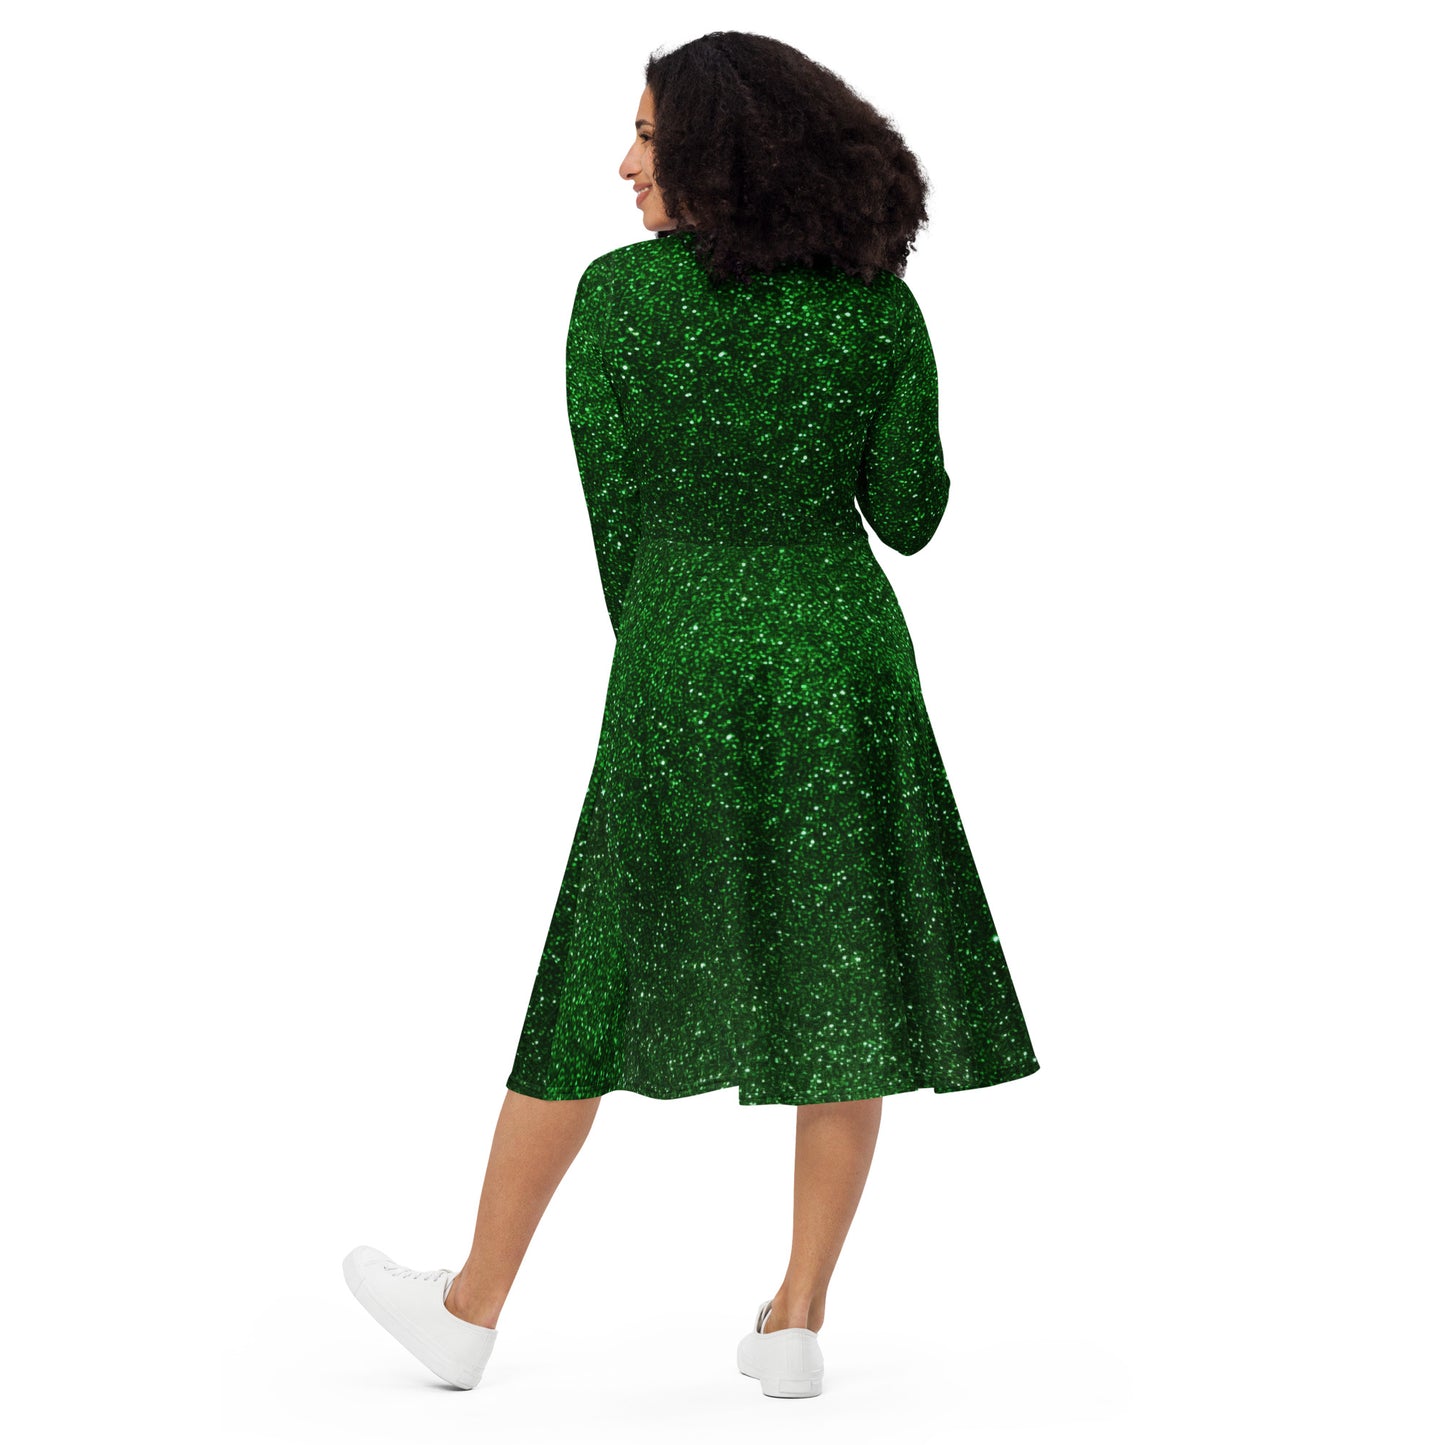 Emerald Elegance: Long Sleeve Midi Dress in Rich Green Hue